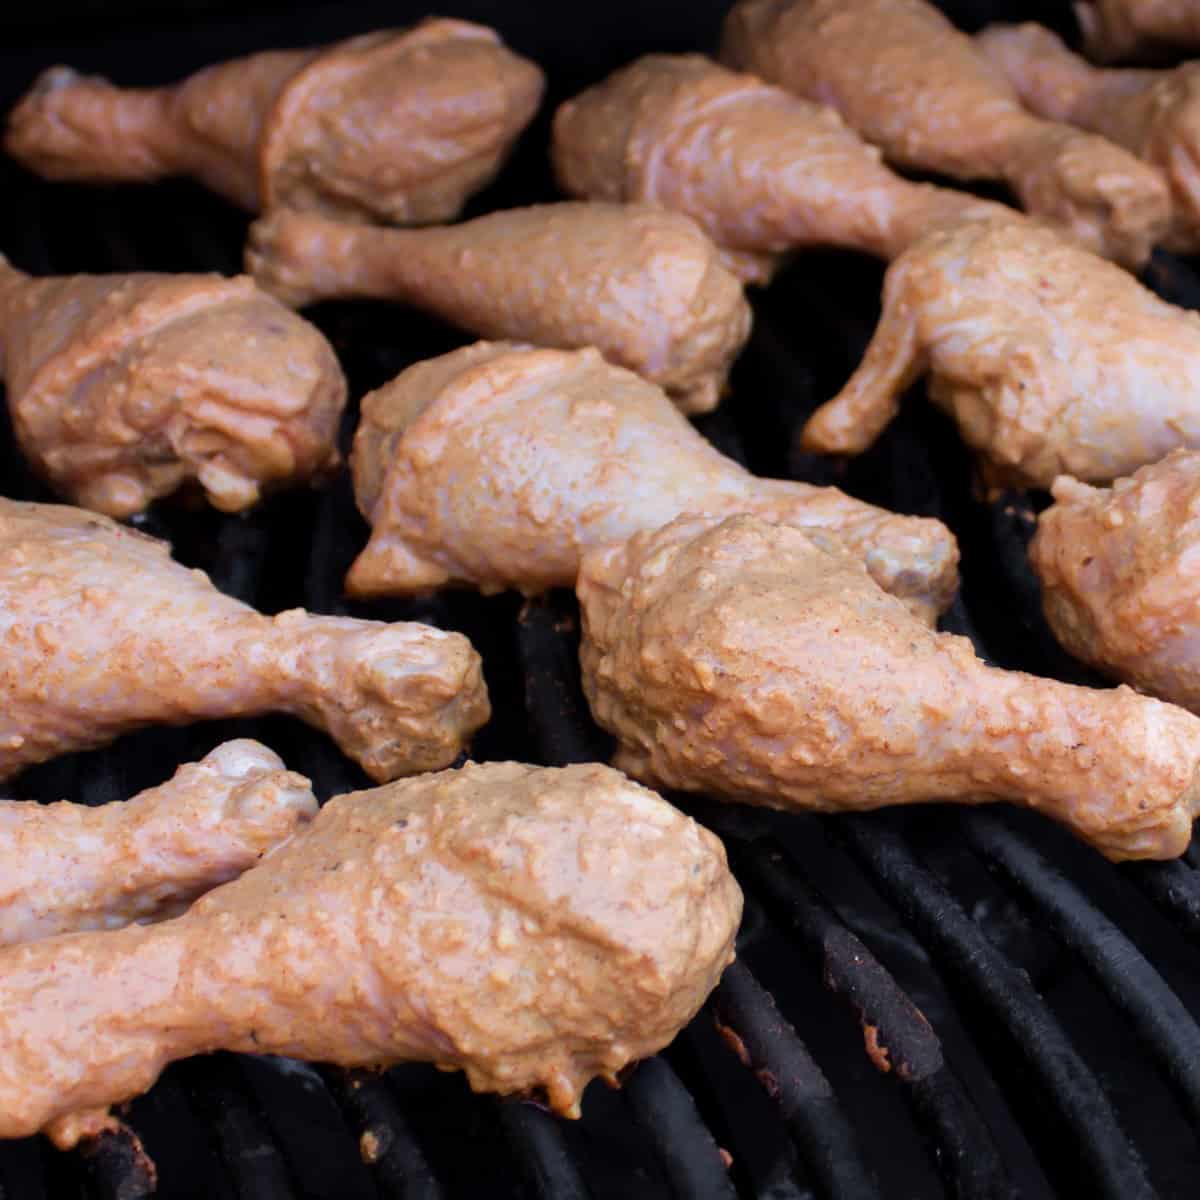 Raw seasoned chicken on grill grates.